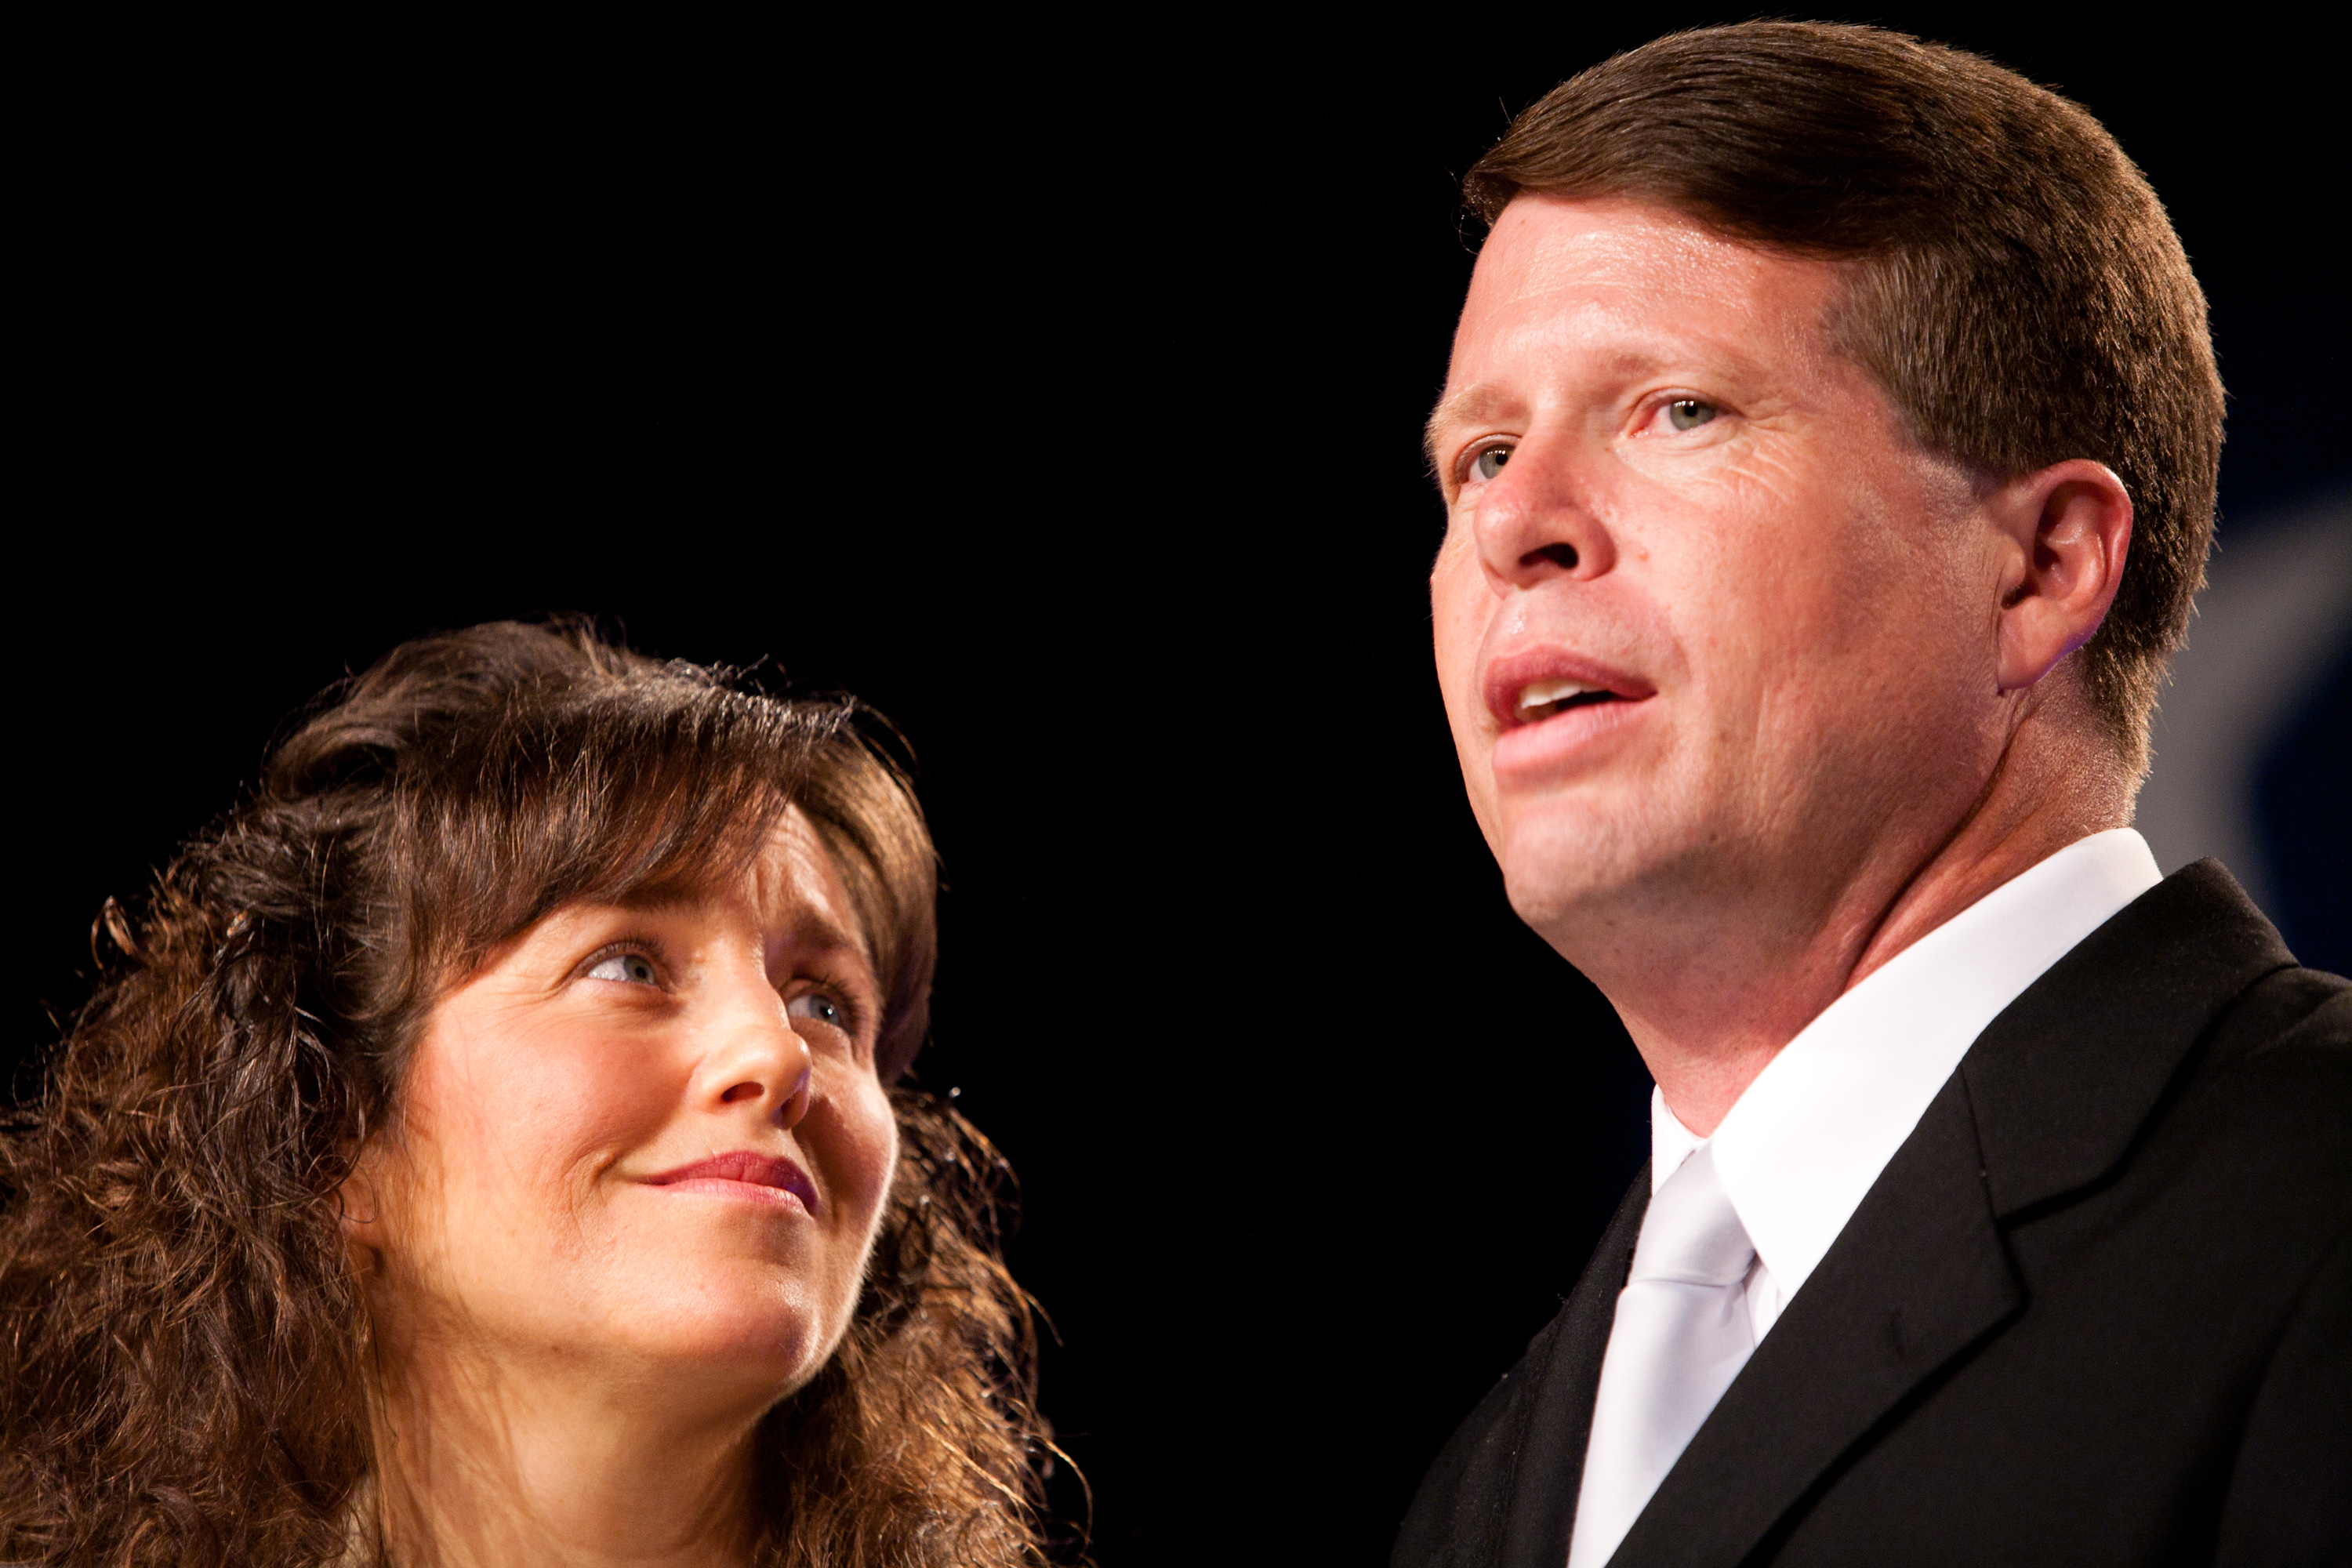 Michelle Duggar and Jim Bob Duggar in Washington in 2010 | Source: Getty Images